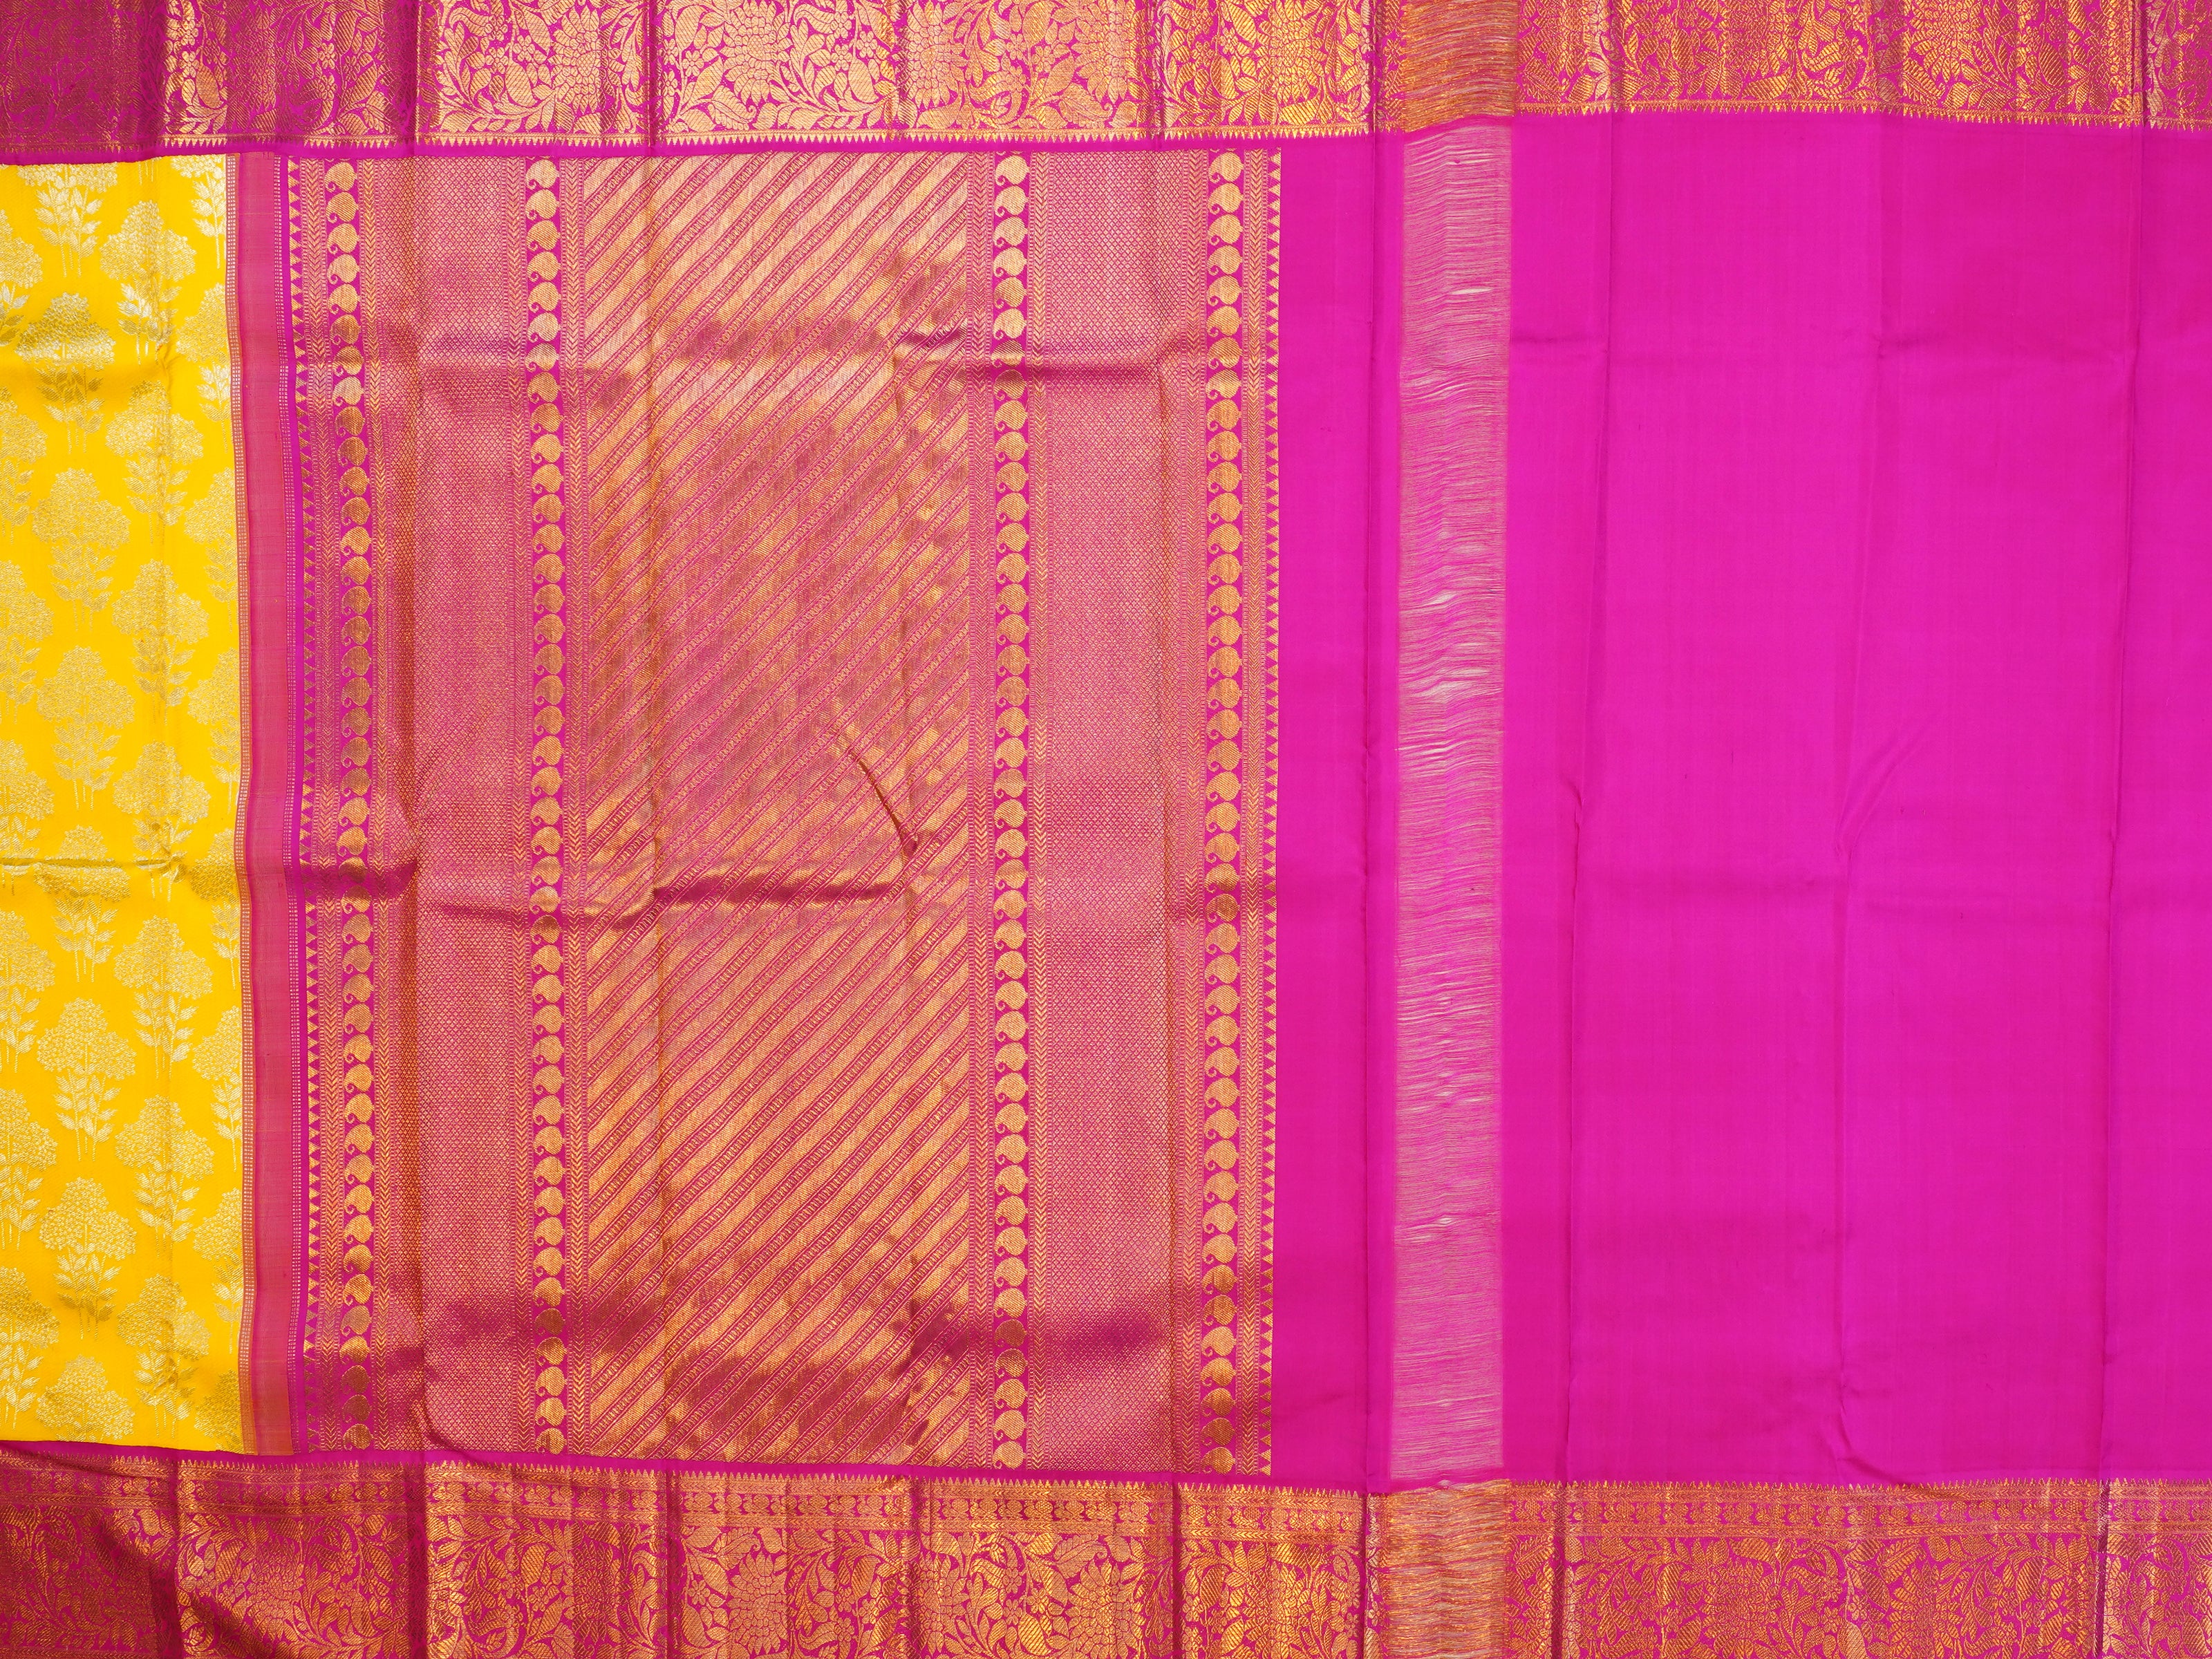 JSB - 2849 | Yellow & Pink Kanchi Pattu Sarees